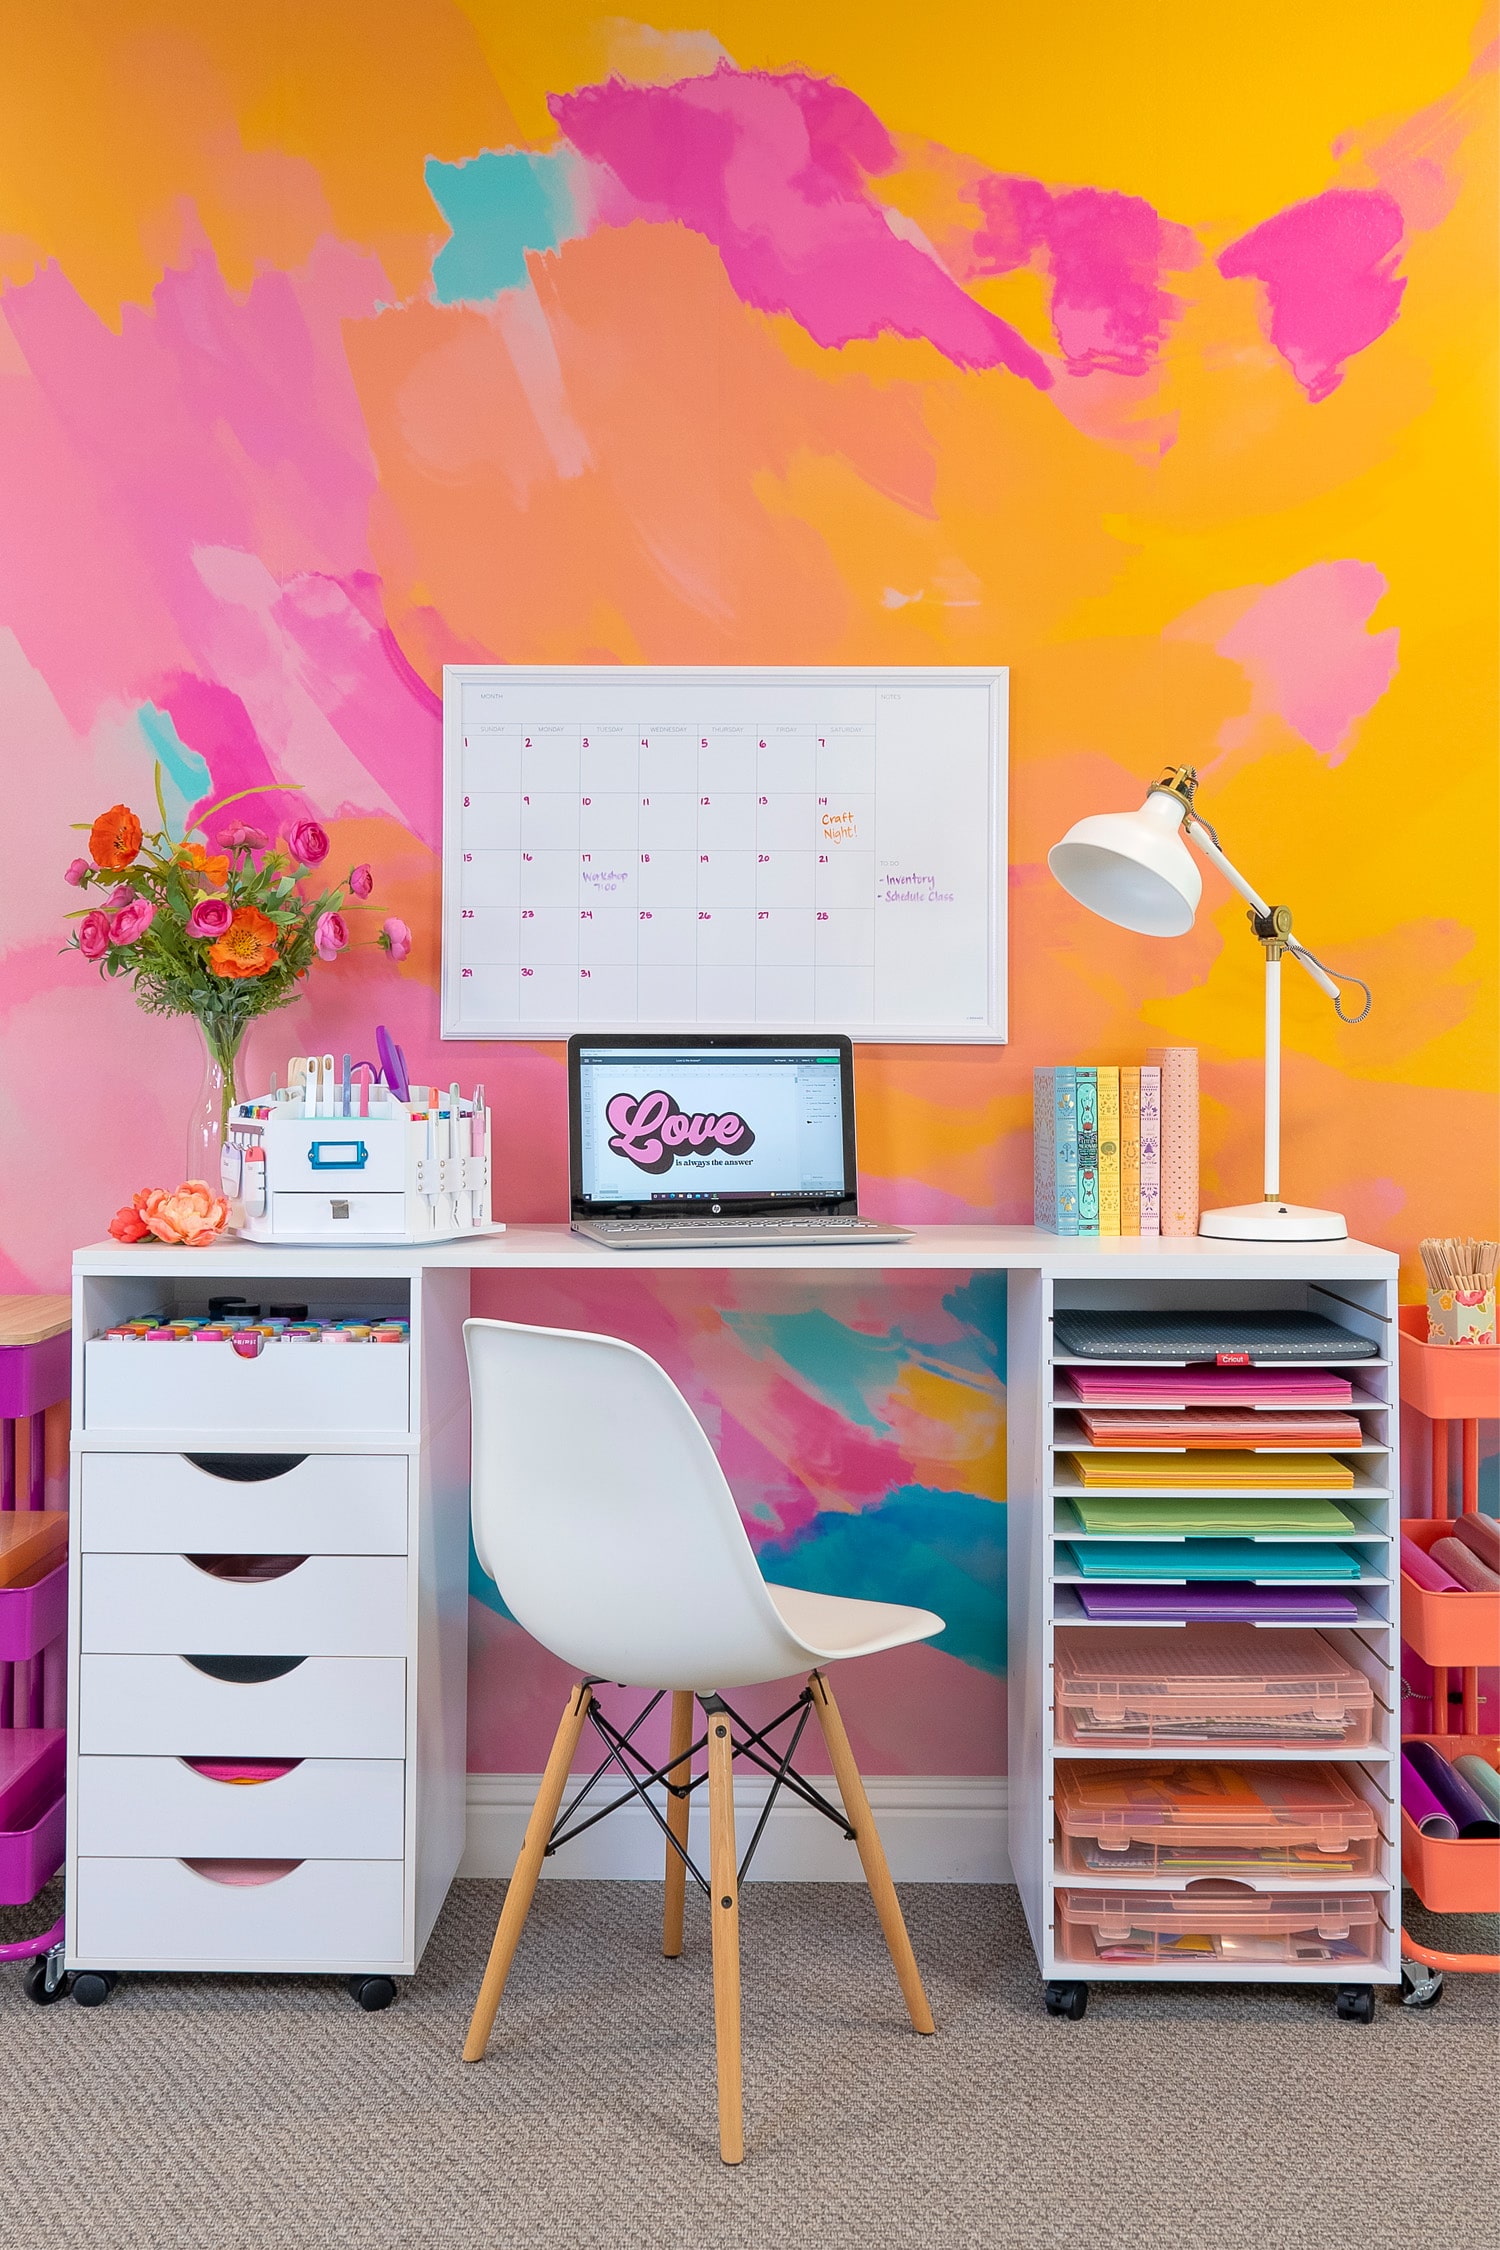 DIY Kids Desk with Storage and Chair Printable Plans - DIY Designs